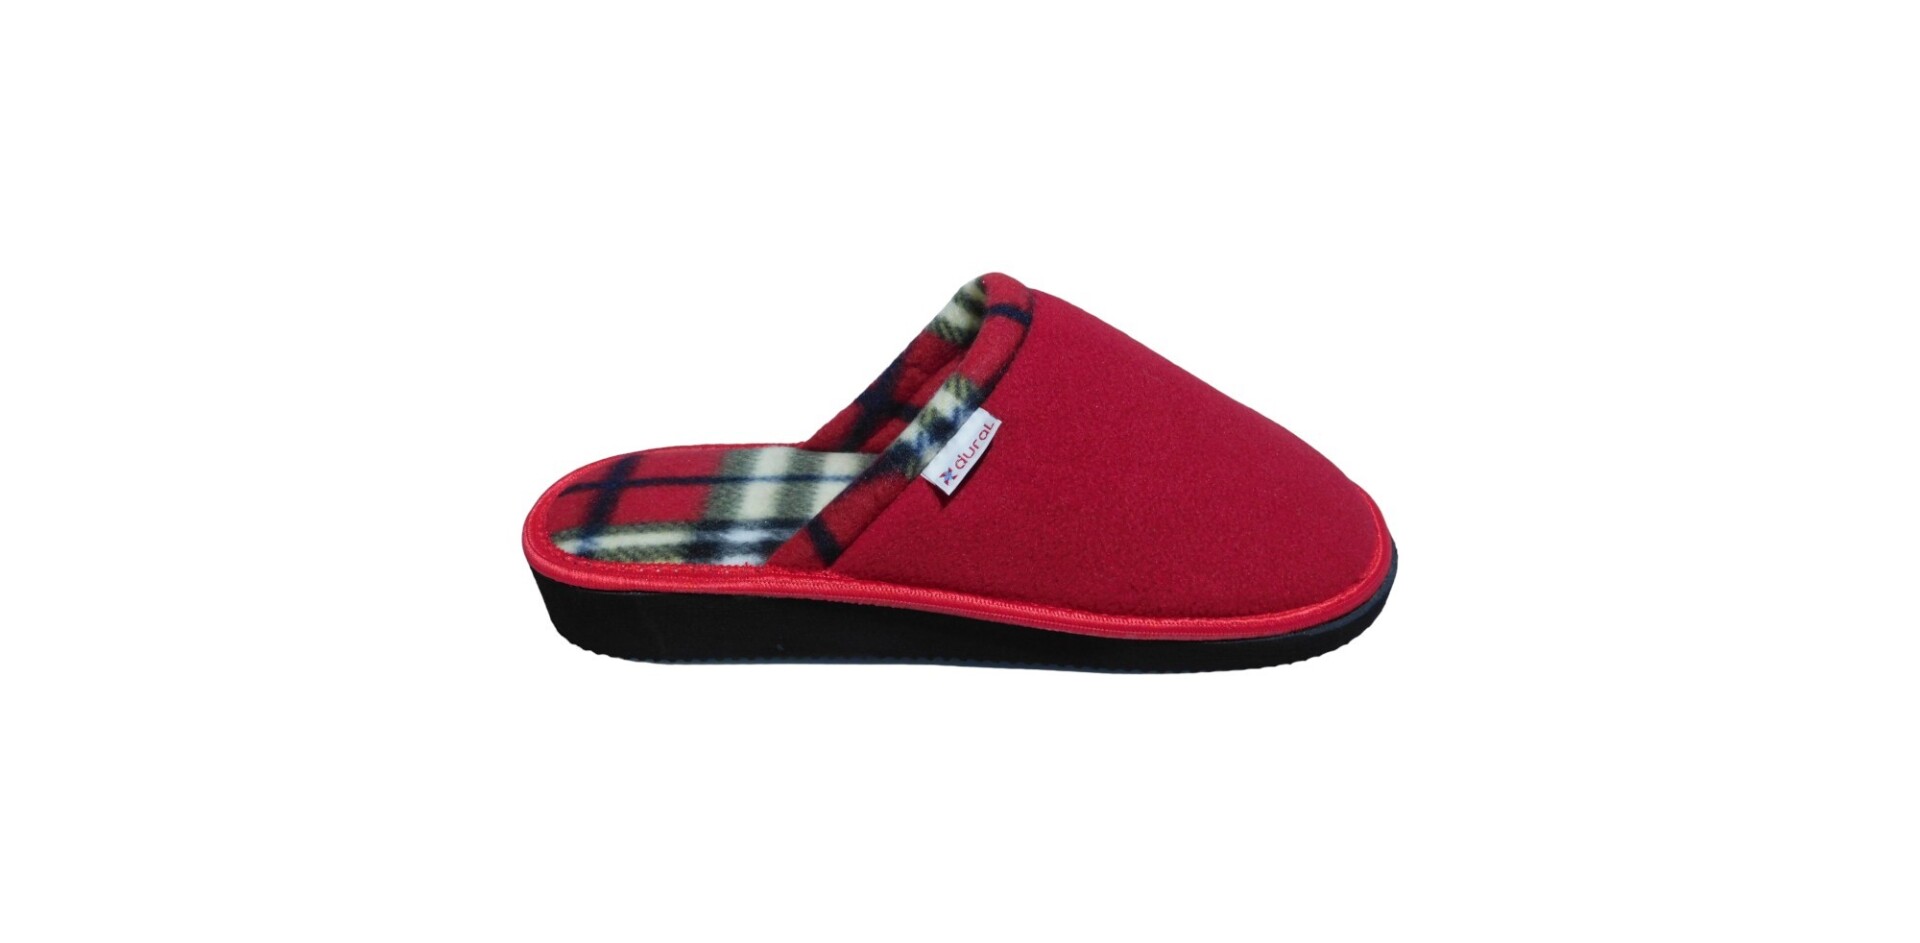 Pantufla roja (diseño escocés) 